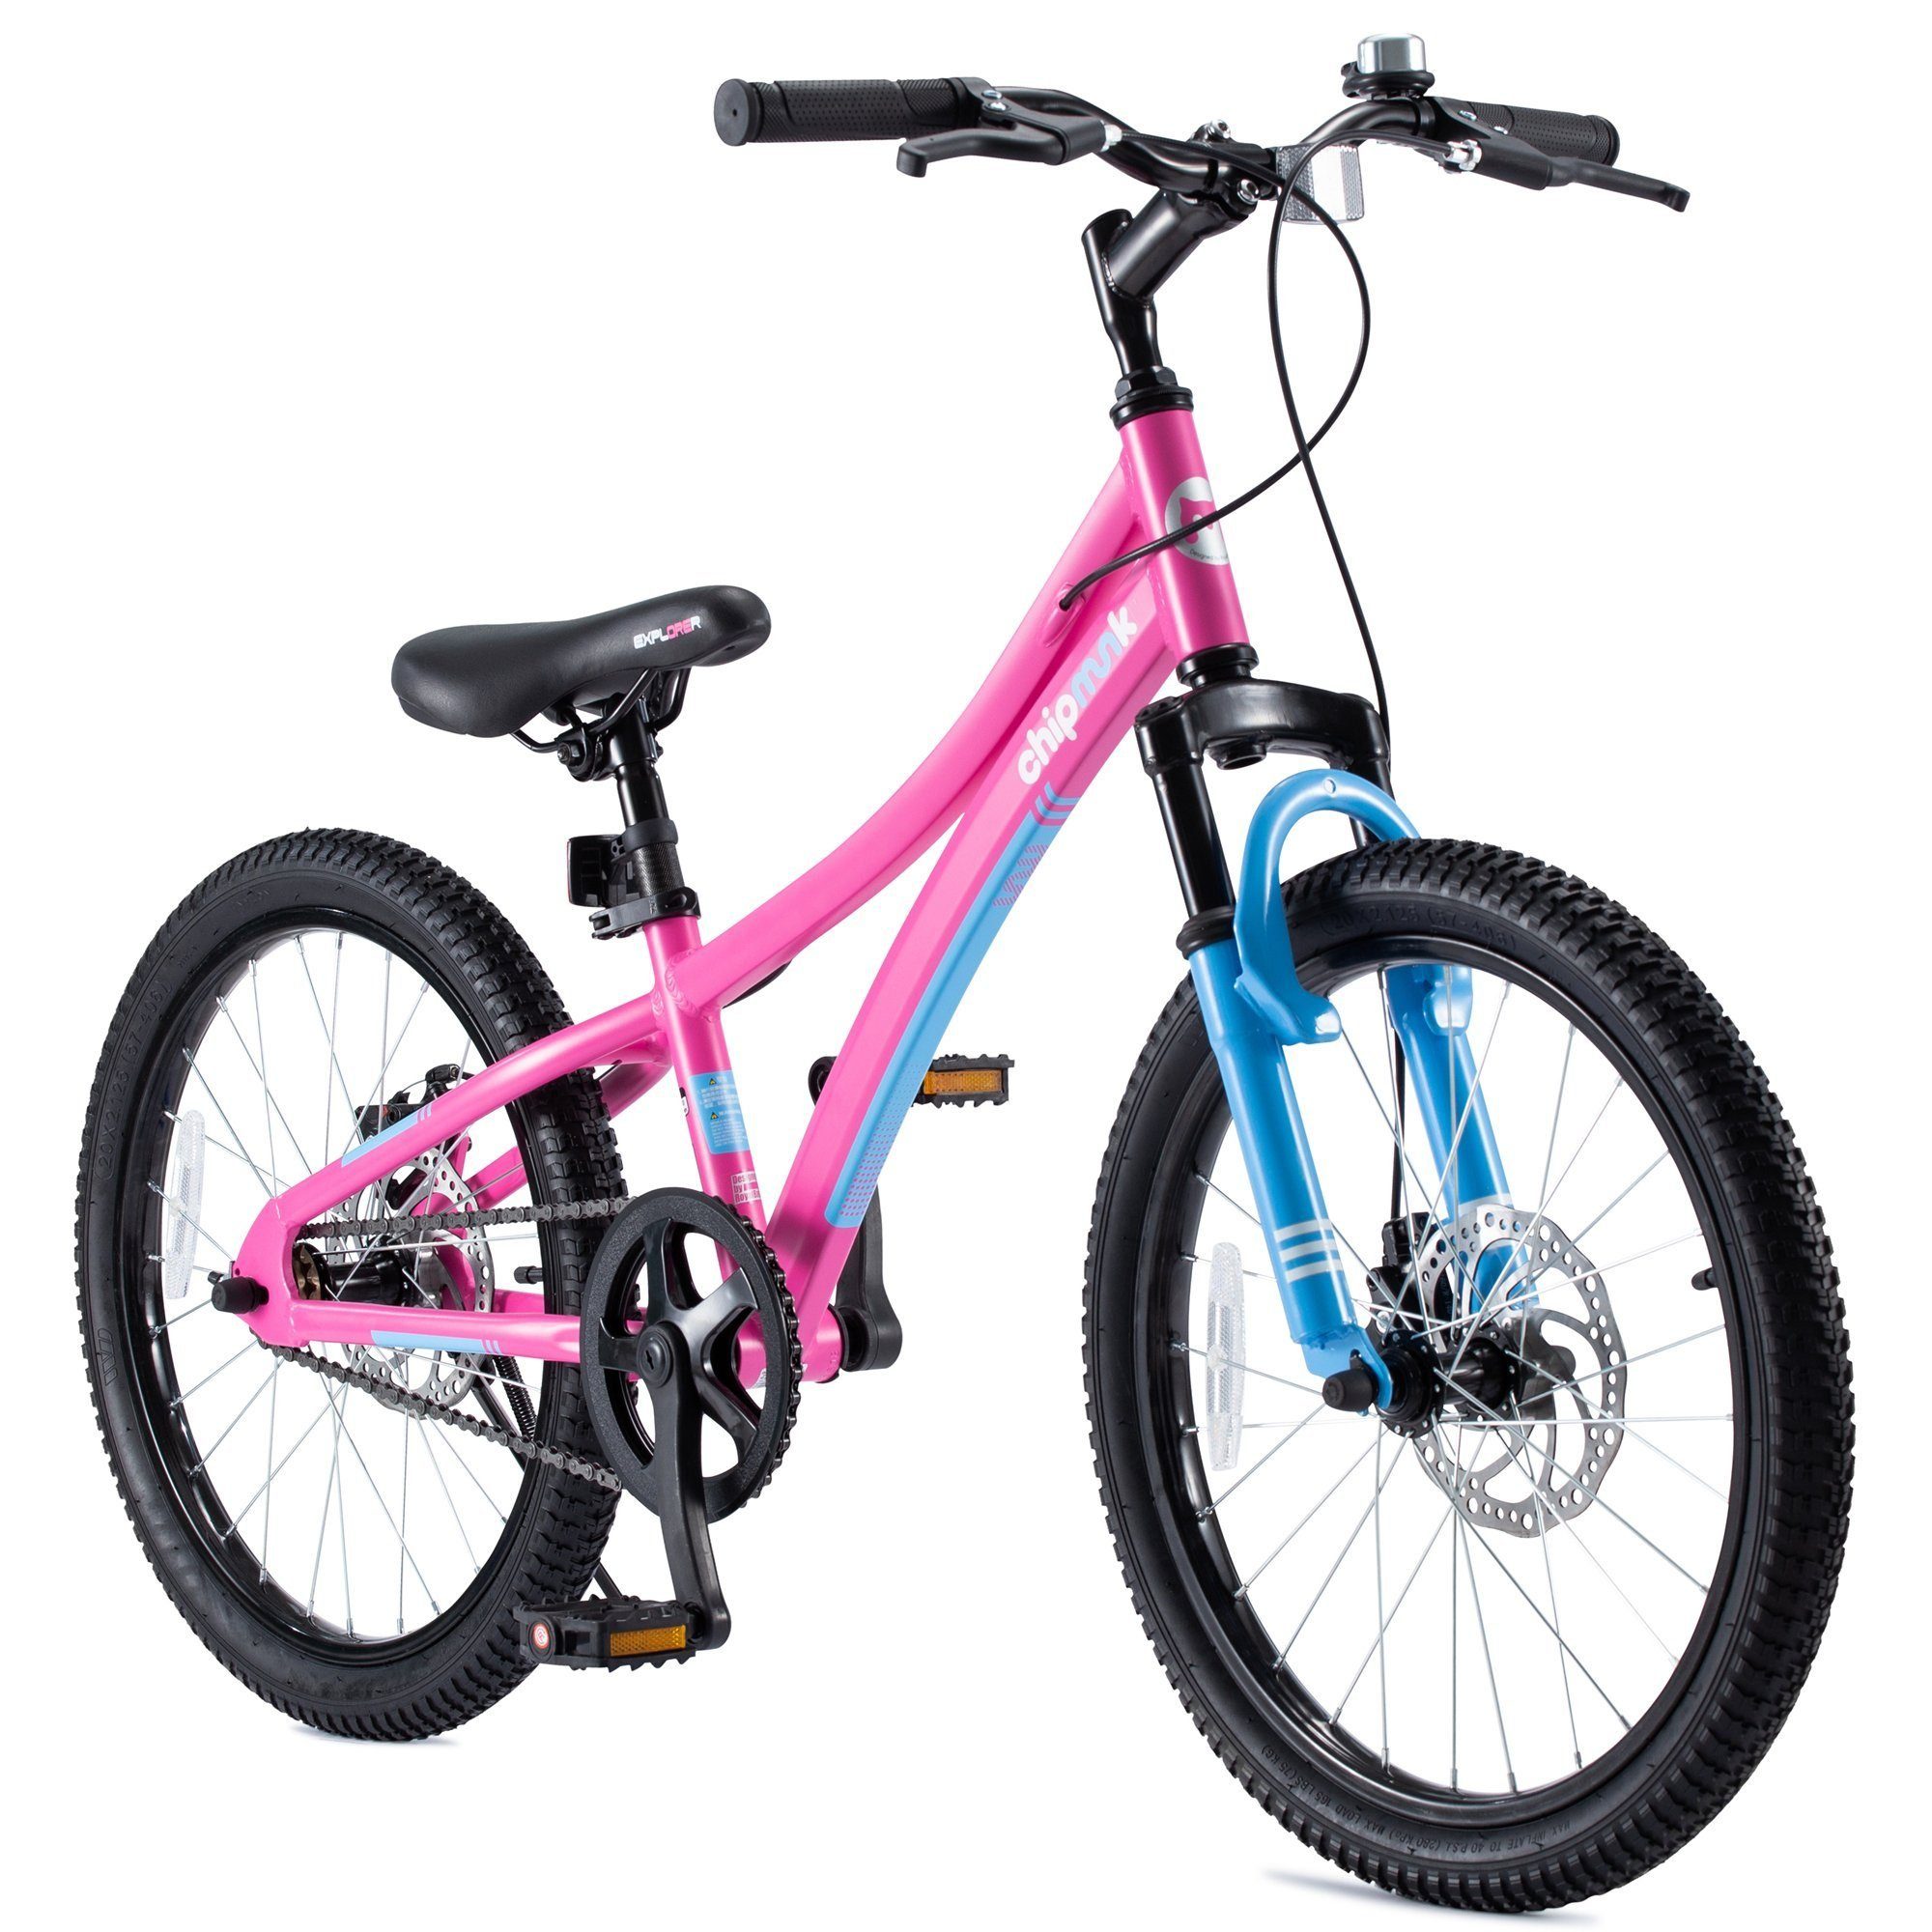 NEU Mountainbike Fahrrad 20 Zoll Kinderfahrrad Mädchen Jungefahrrad Blau 